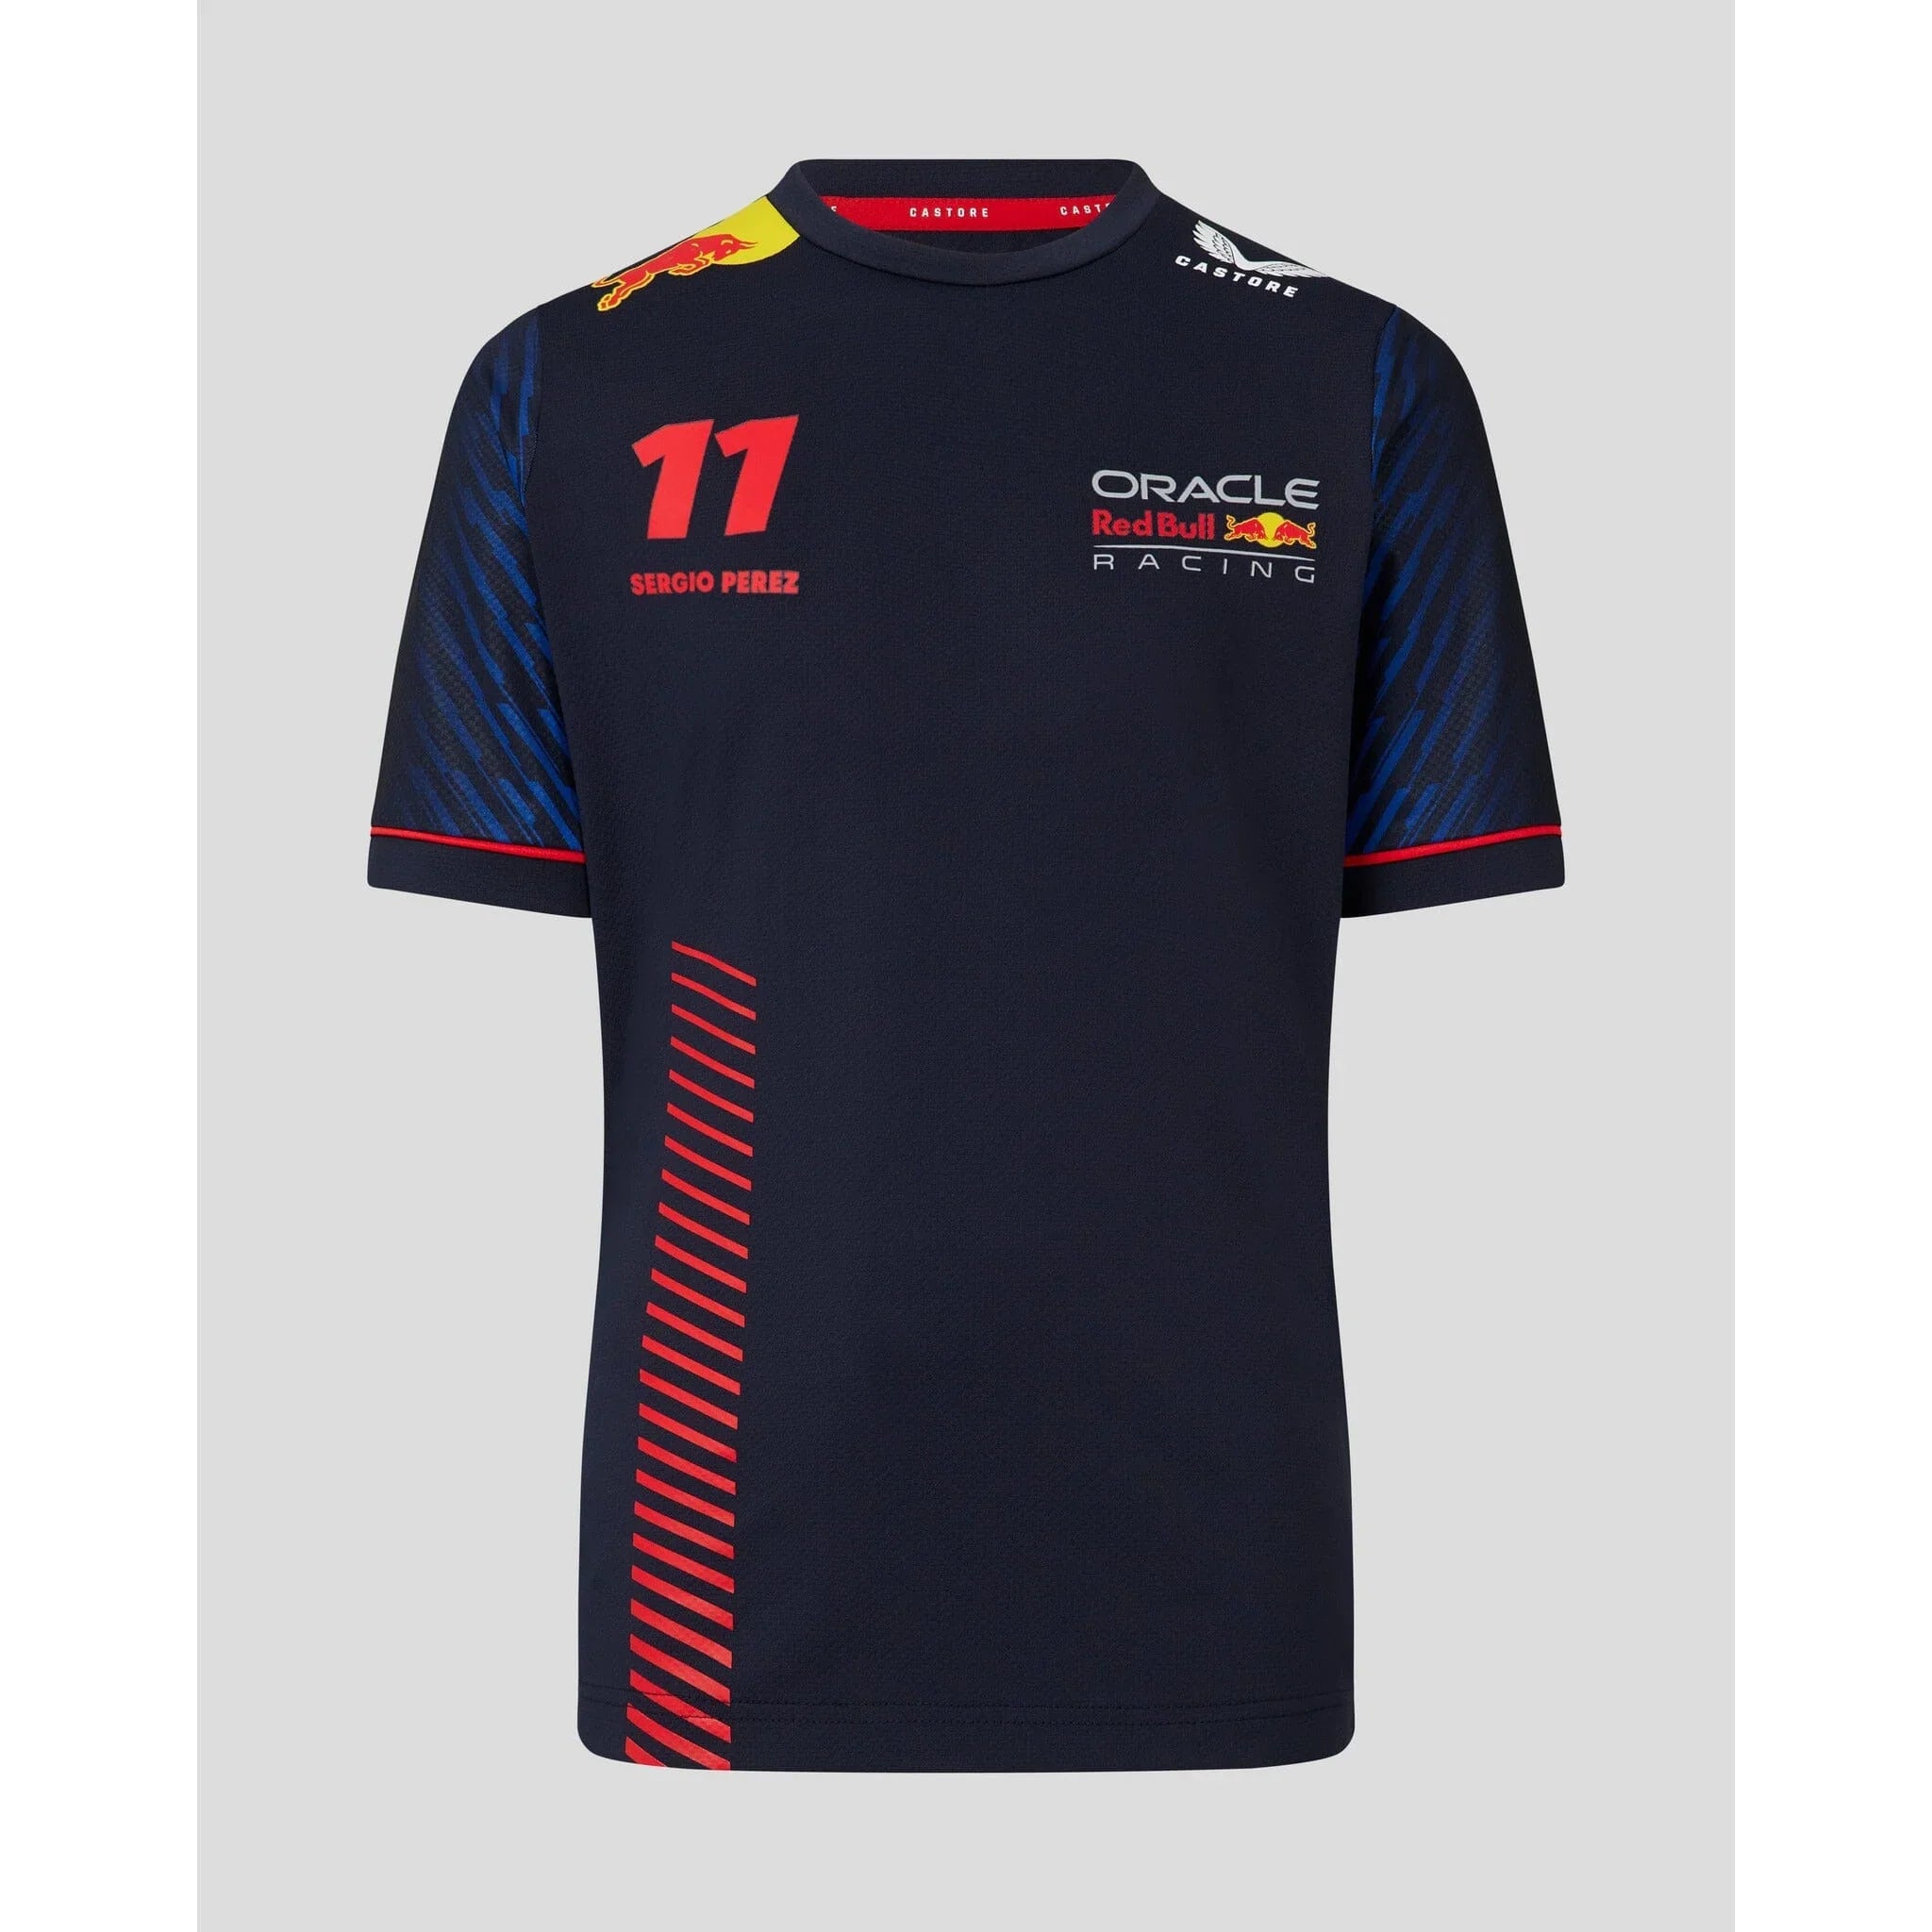 Red Bull Racing F1 Men's Sergio "Checo" Perez Team T-Shirt Navy